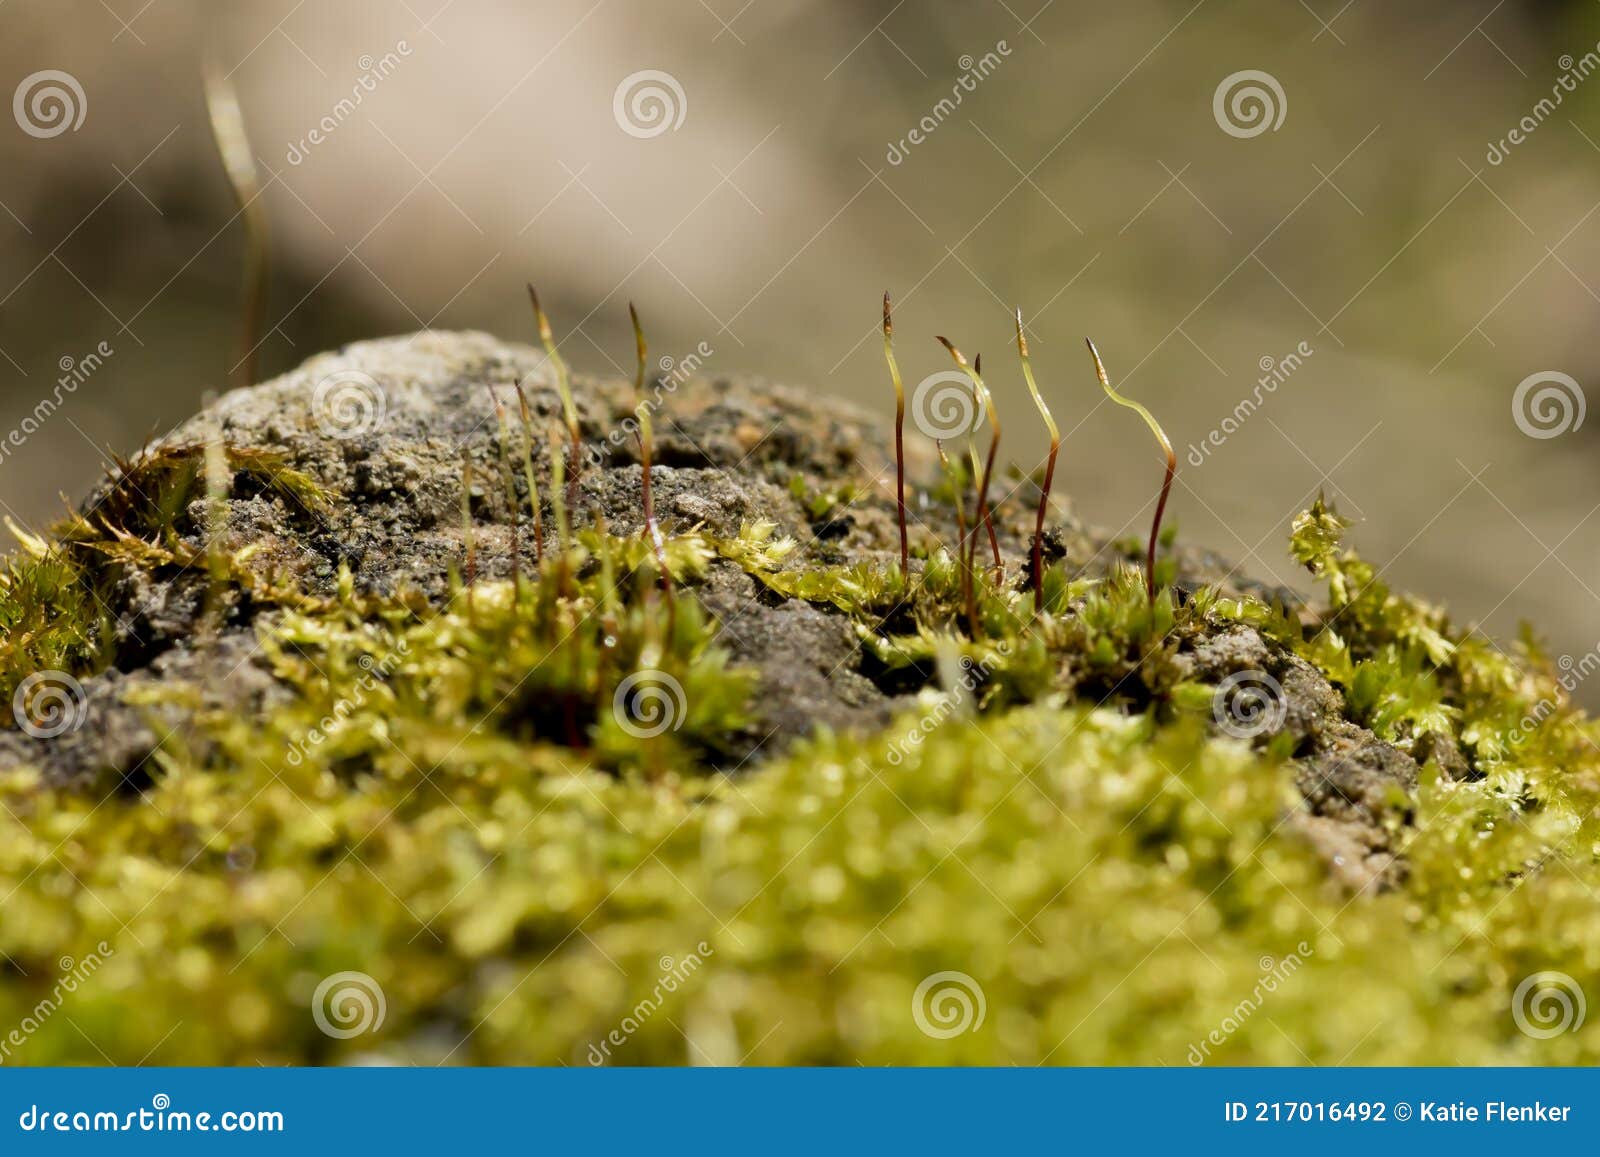 moss seta closeup with blurred background